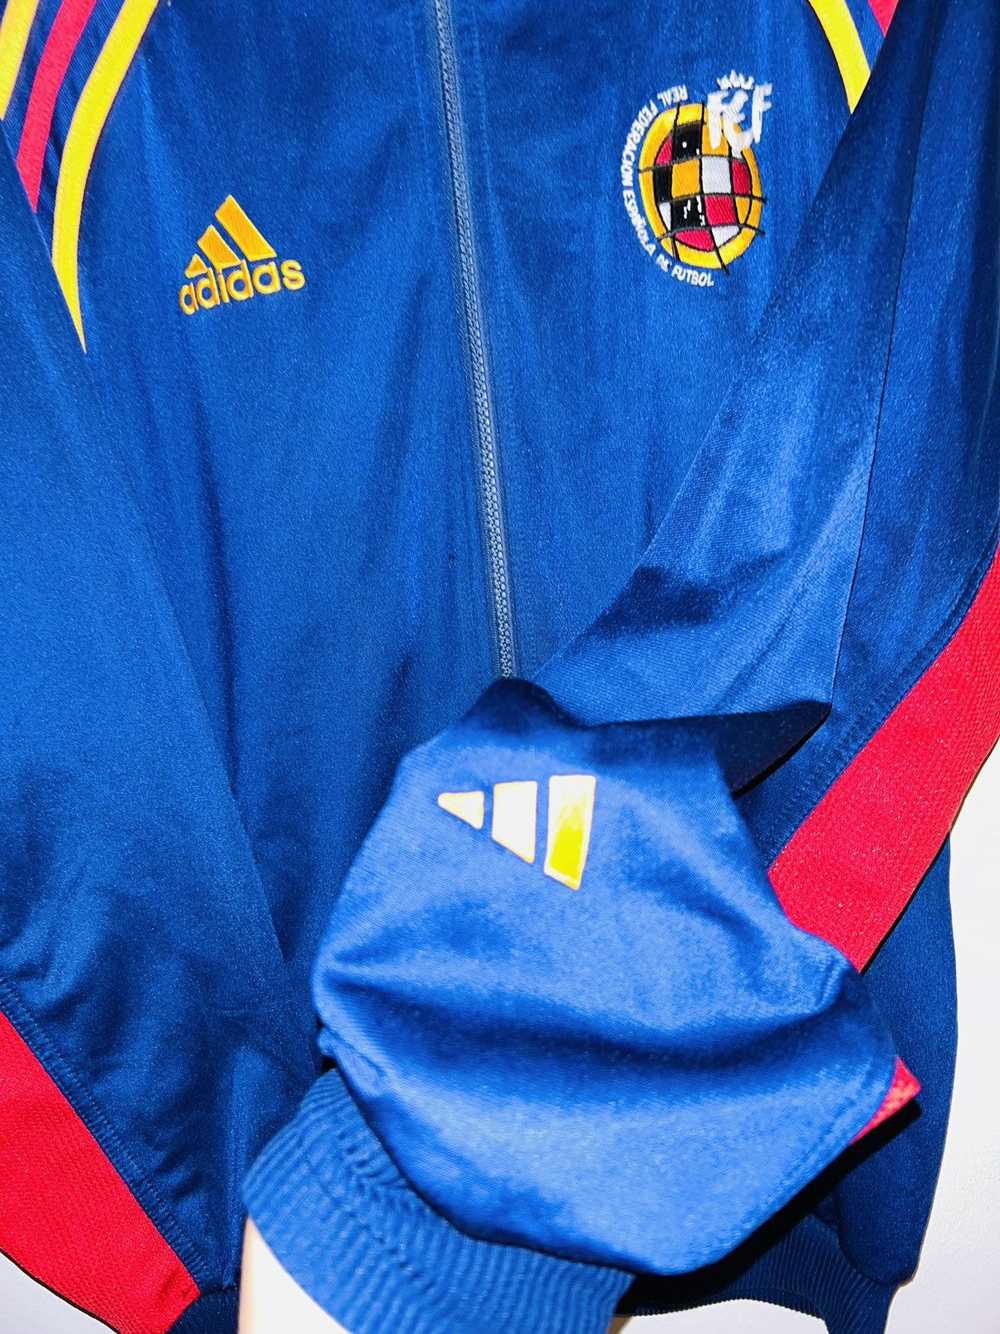 Adidas × Soccer Jersey × Vintage Spain y2k jacket - image 3